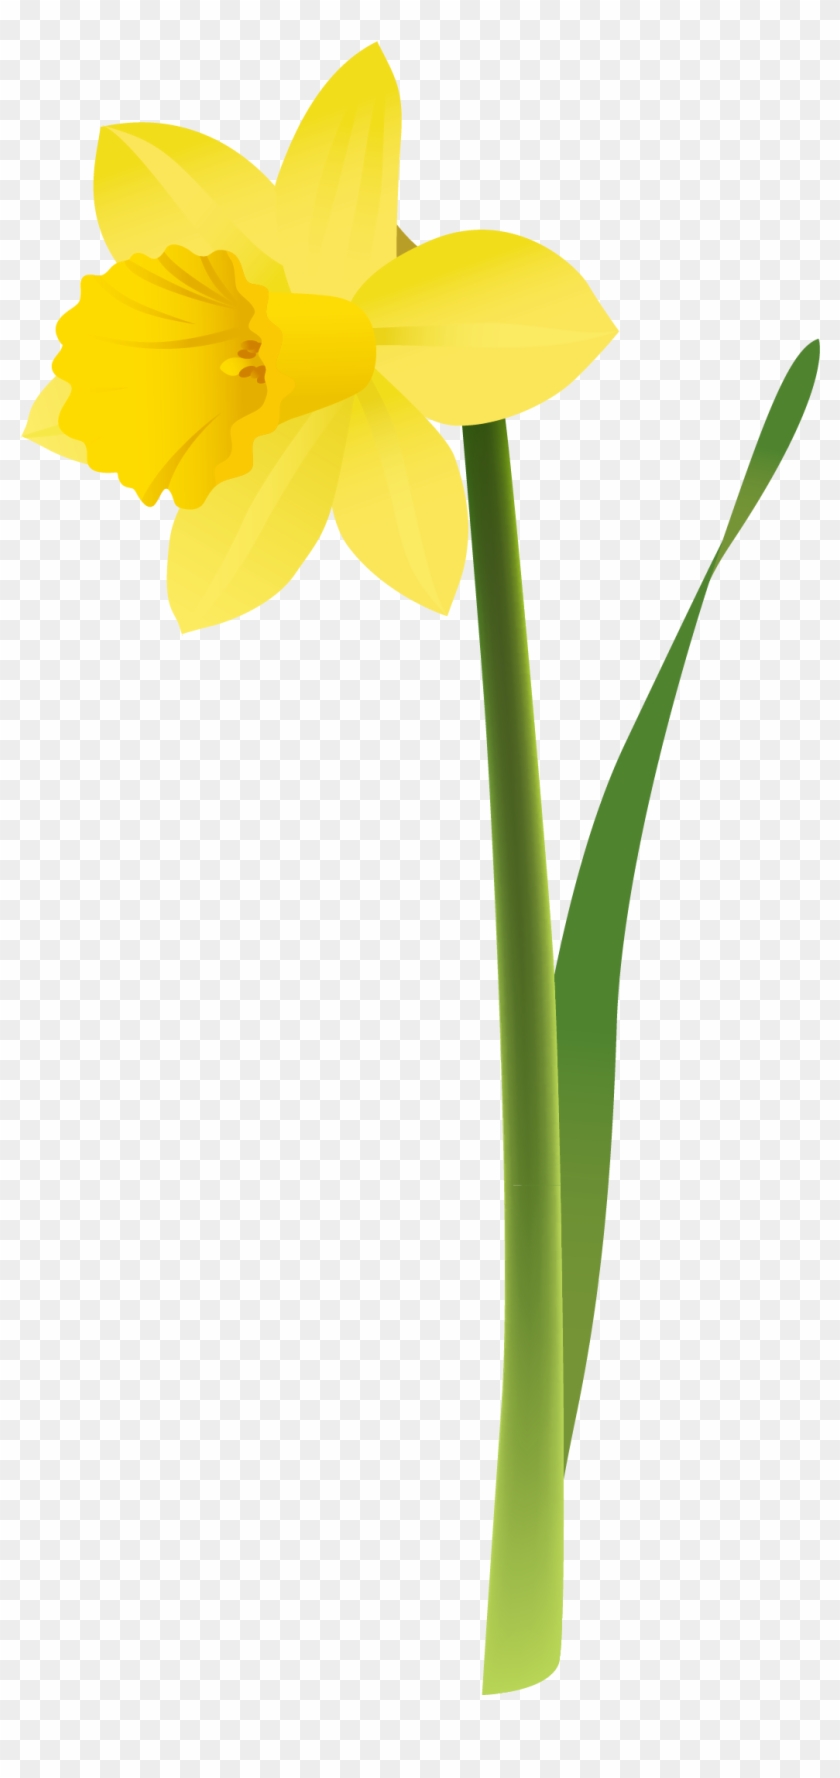 Download Daffodil clipart jonquil, Daffodil jonquil Transparent ...